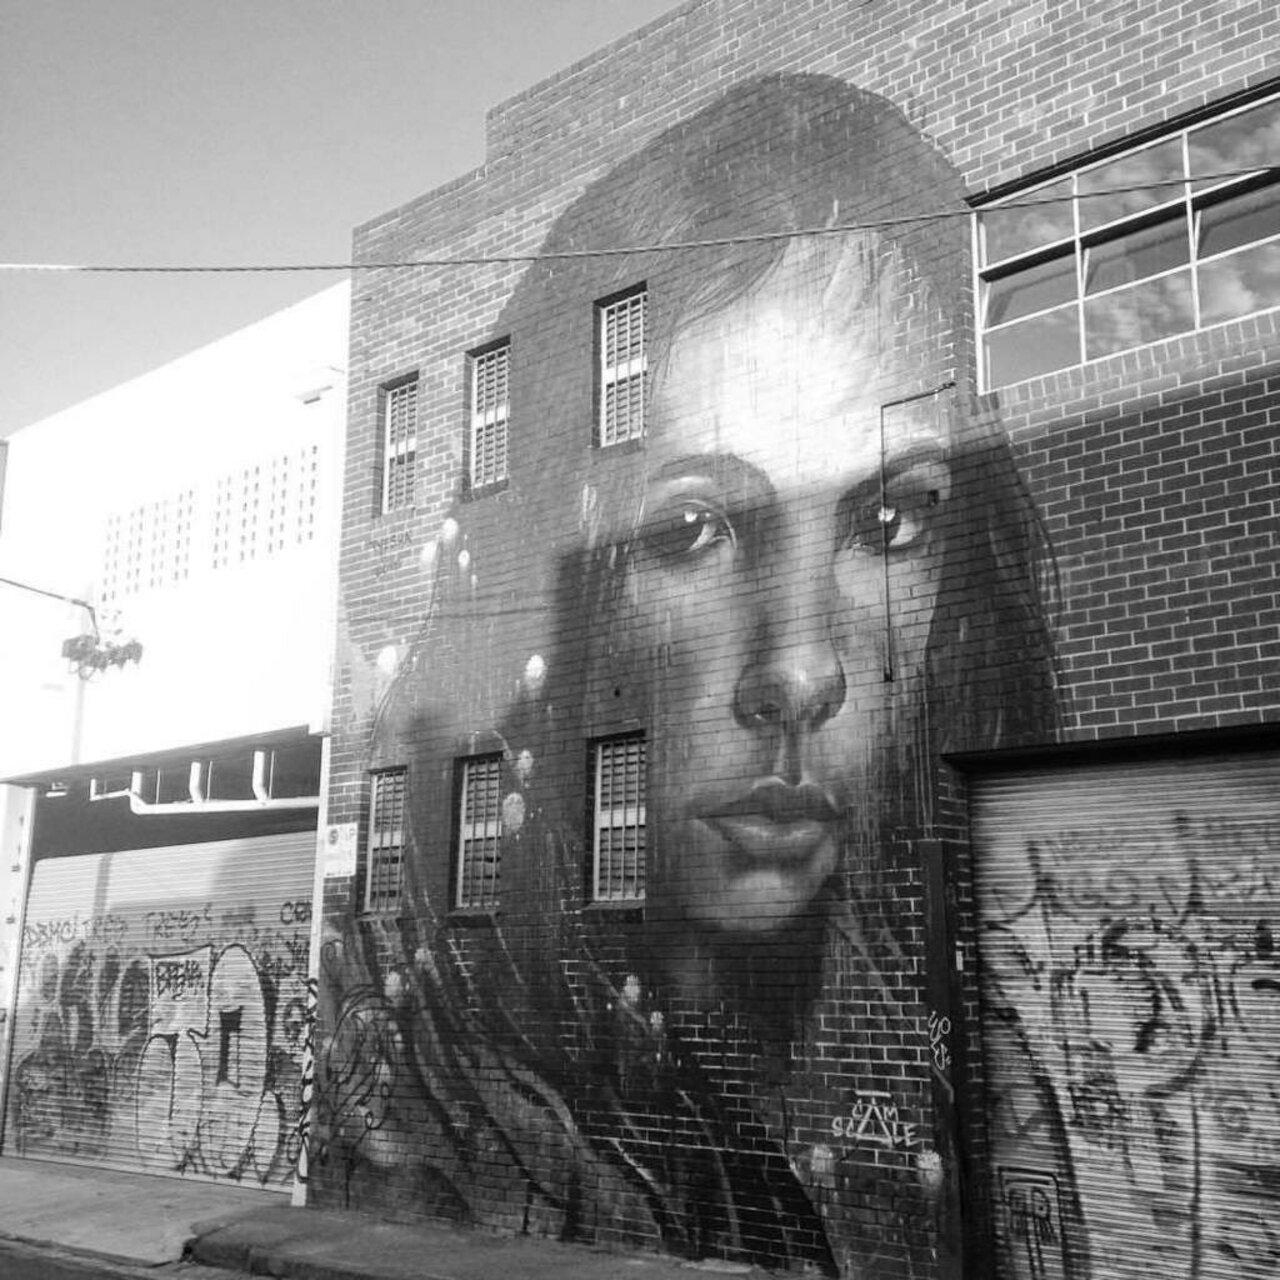 Melbourne, Australia #mural #Streetart #urbanart #graffiti #mural #art #Melbourne #Australia https://t.co/okDHytA1Yl